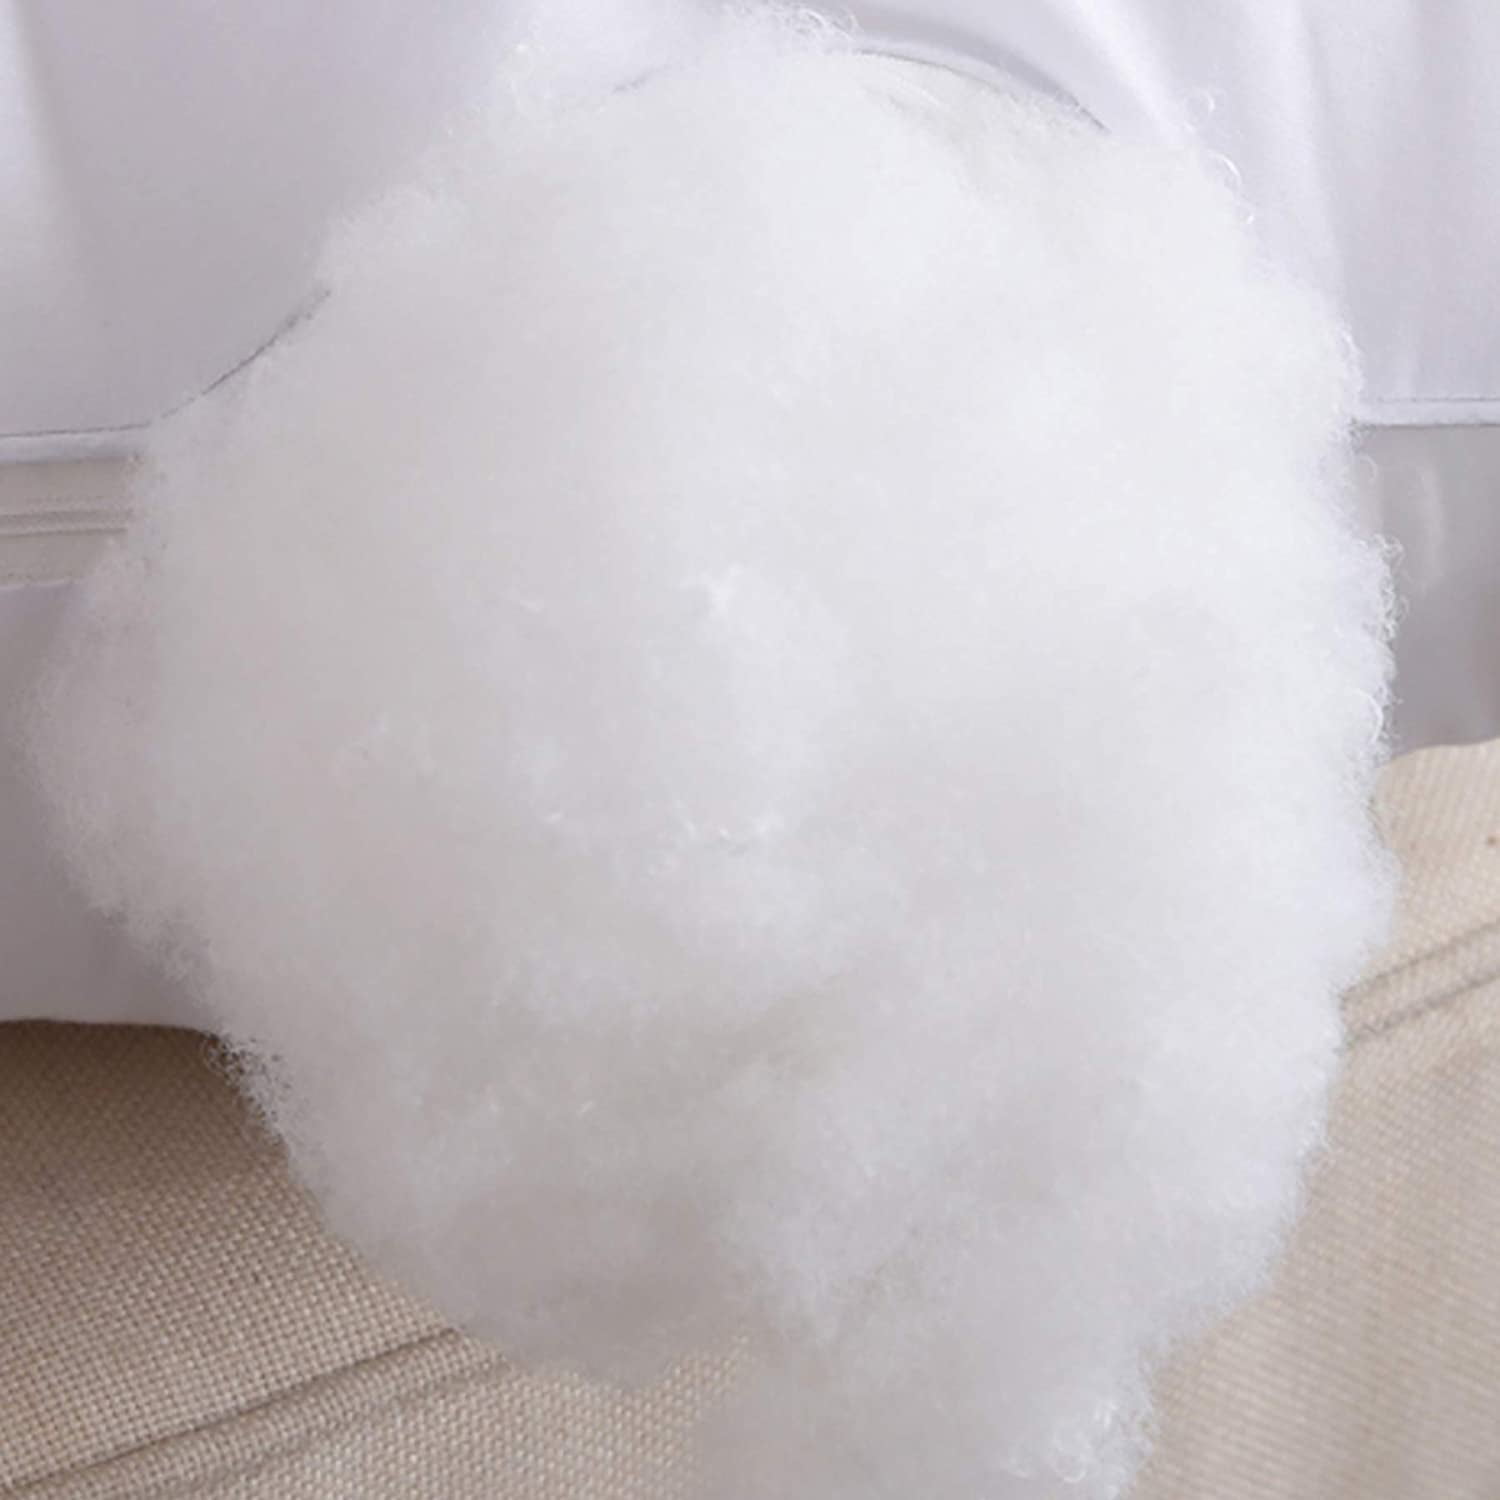 Jupean Fiber Fill,Foam Filling, for Pillow Stuffing, Couch Pillows, Cushions 800g, Size: 800g/28.2oz